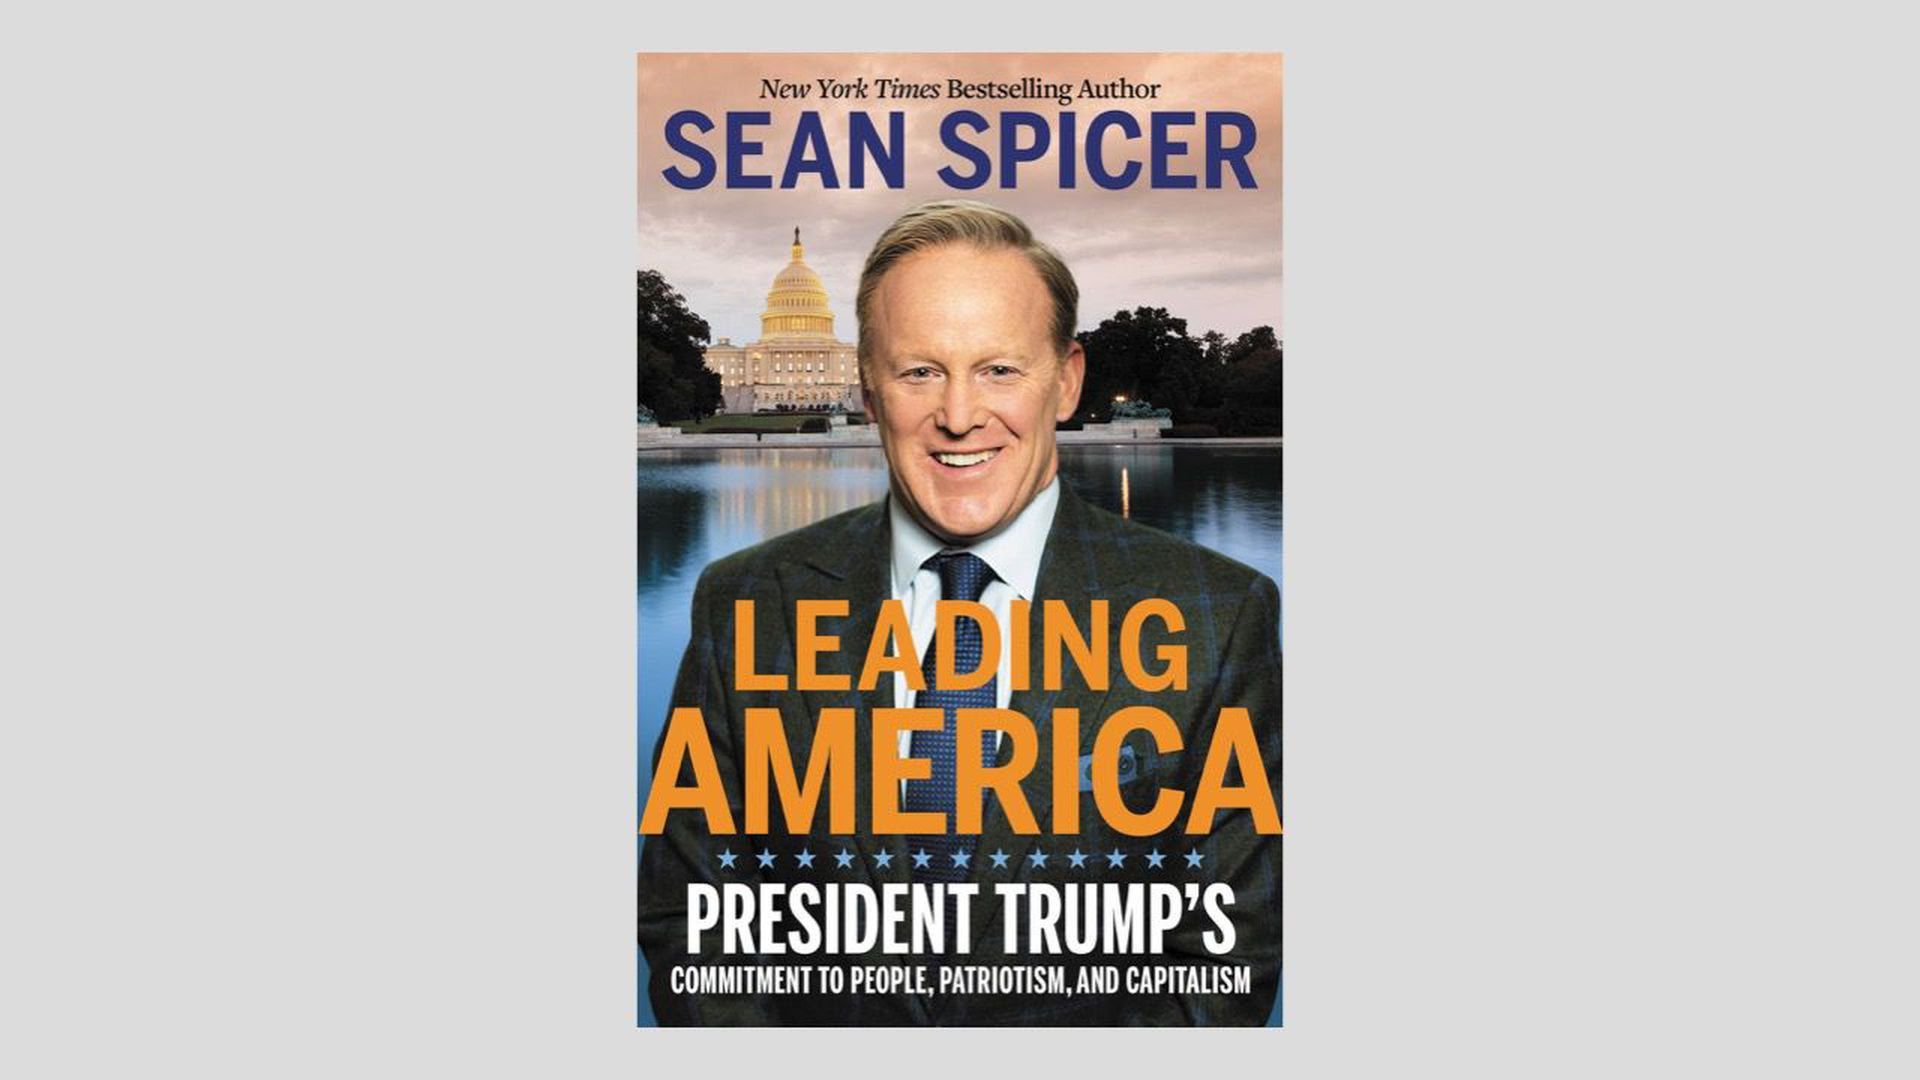 Sean Spicer's book cover "Leading America"